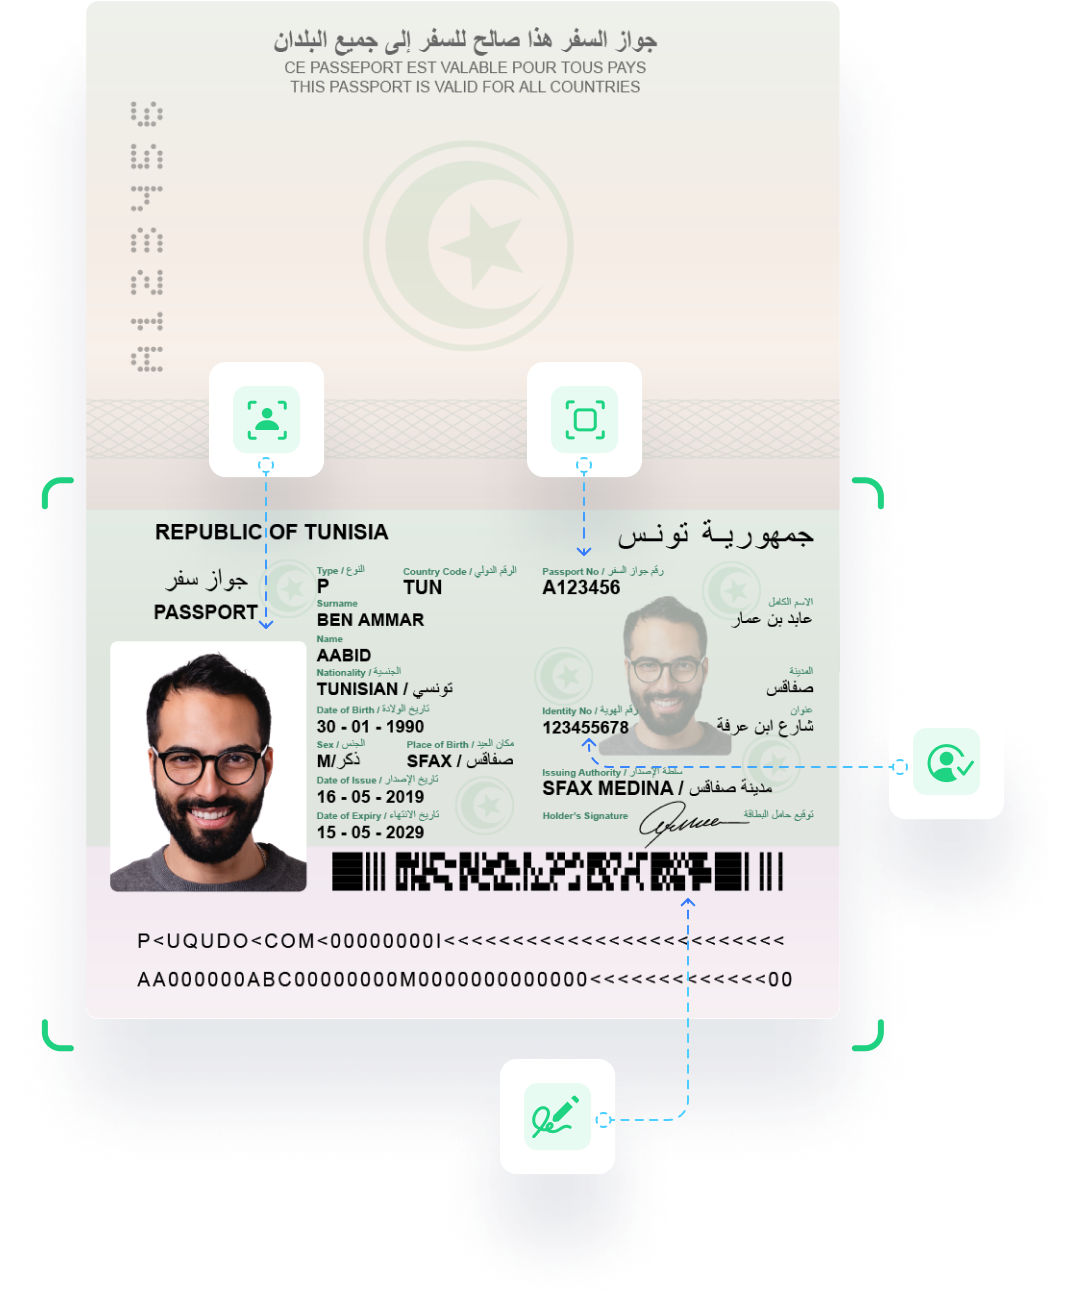 Passport AI scanning & digital identity services in Tunisia